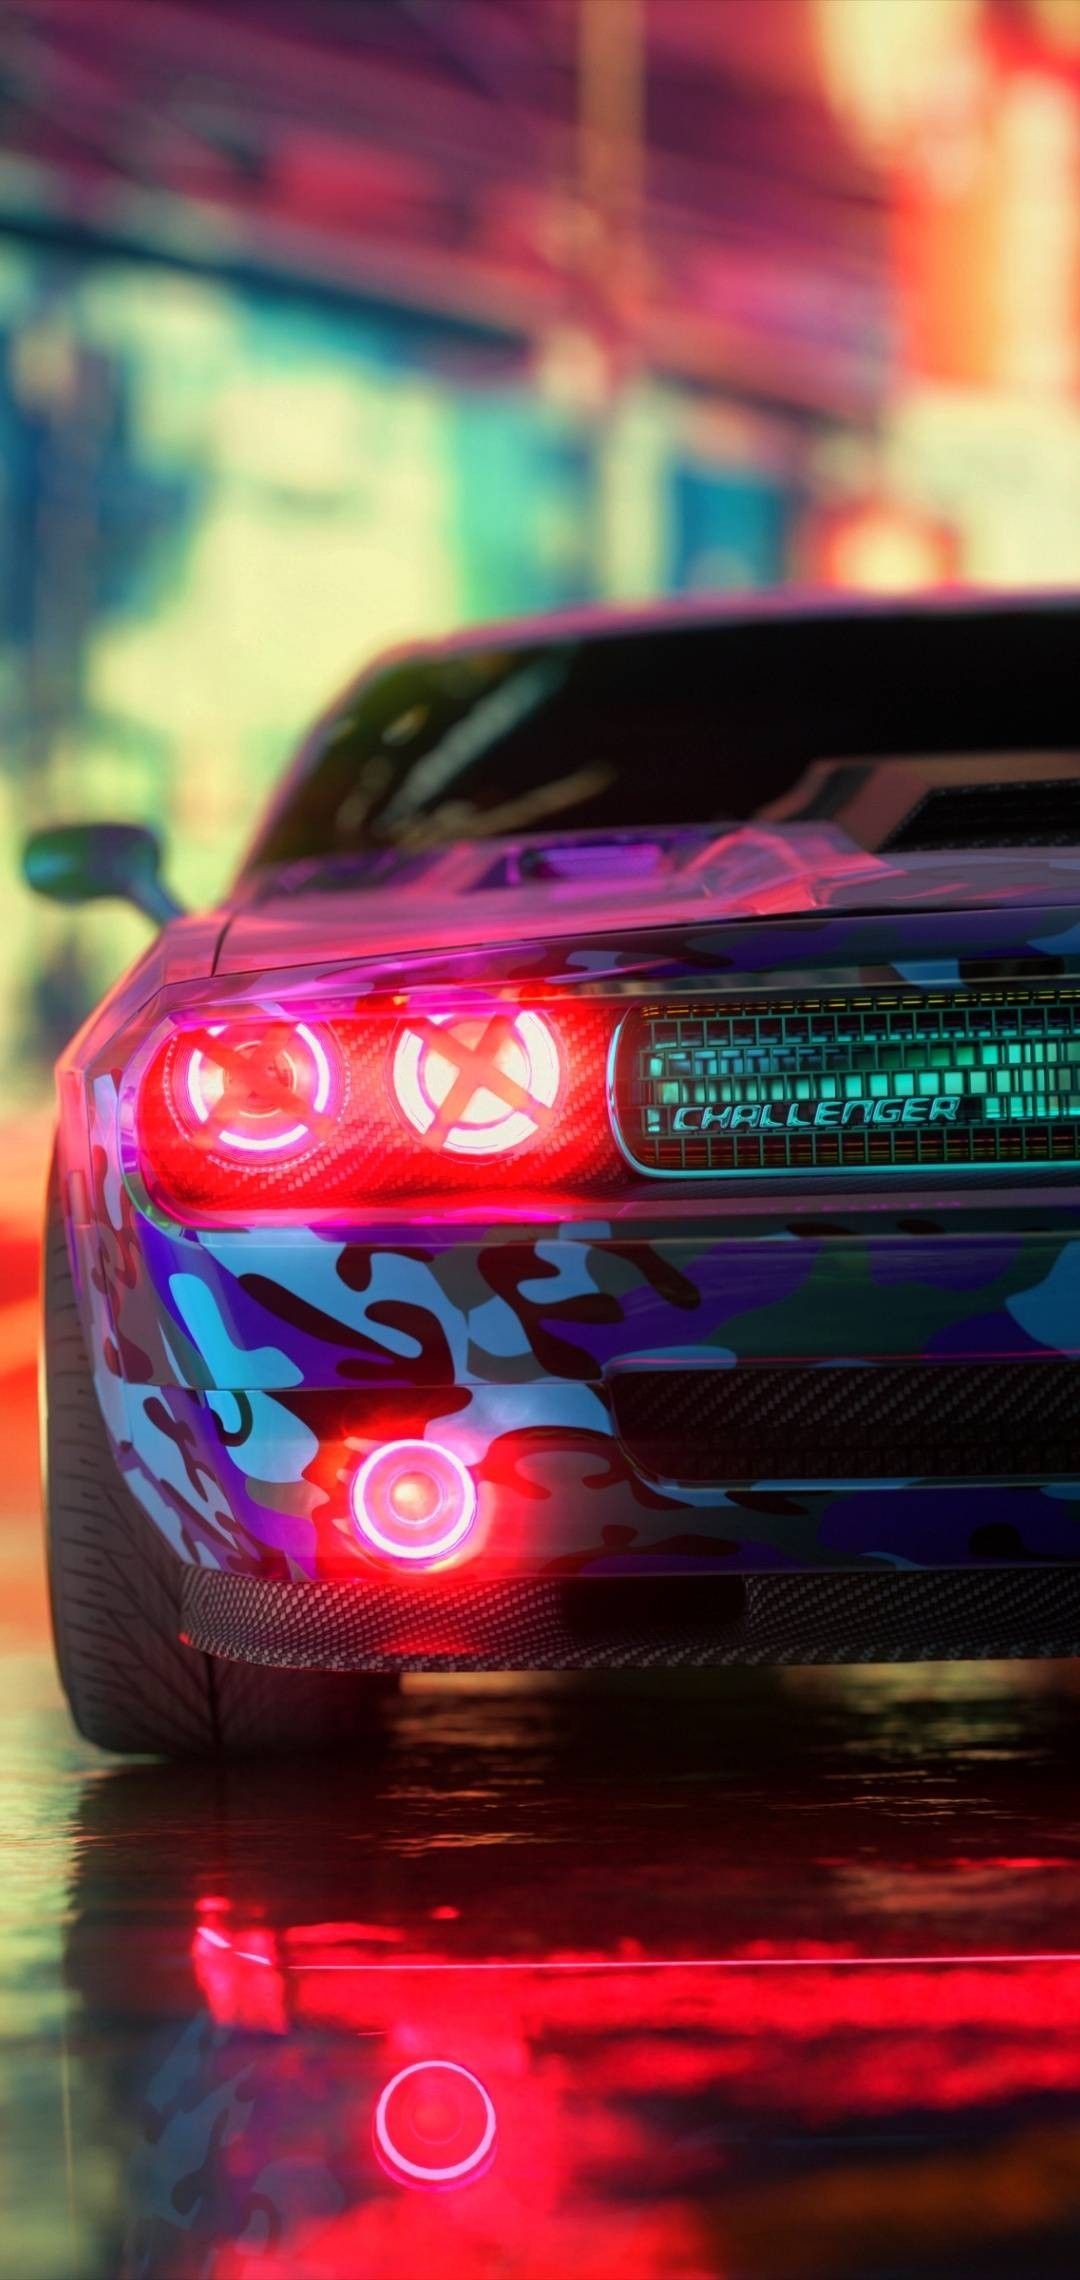 Dodge Challenger Neon Camo. Car iphone wallpaper, Car wallpaper, Dodge challenger